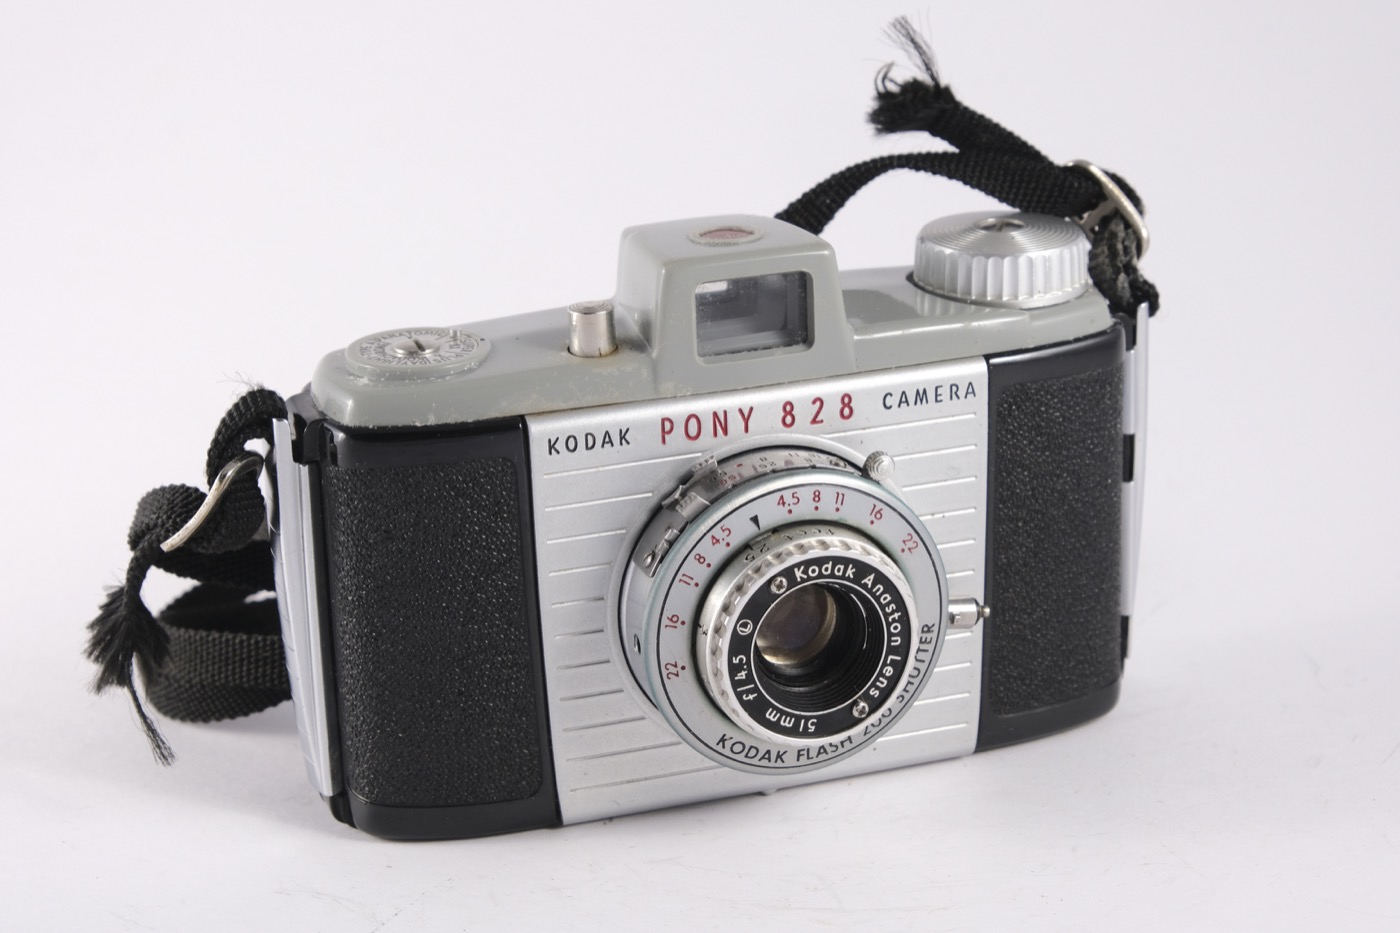 Kodak Pony 828 camera